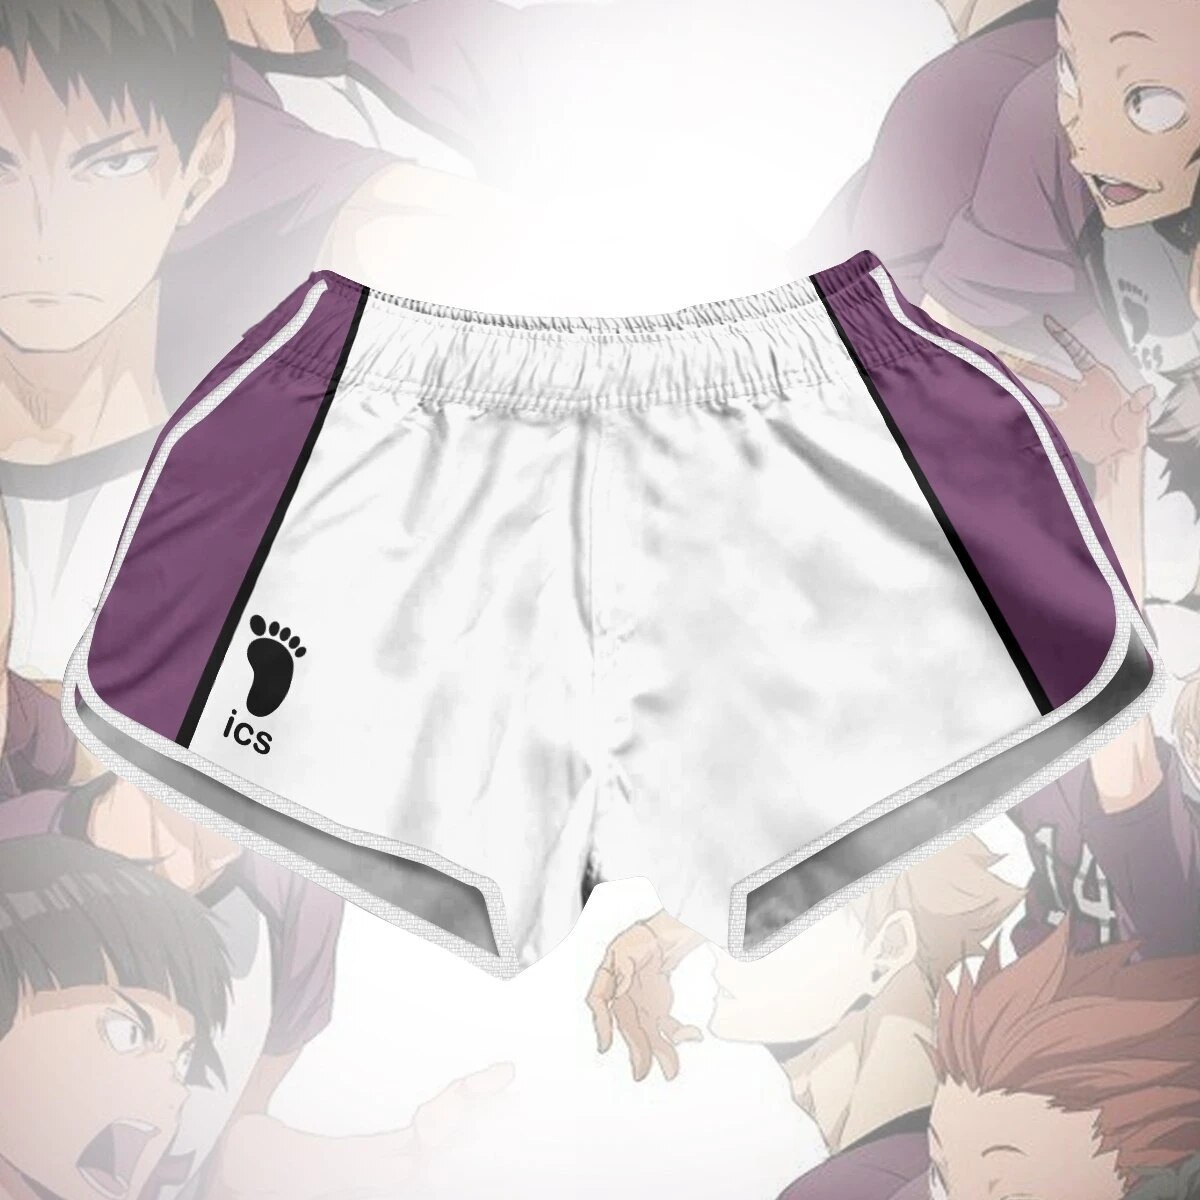 Haikyuu!! – Different Characters Themed Summer/Beach Shorts (7 Designs) Pants & Shorts